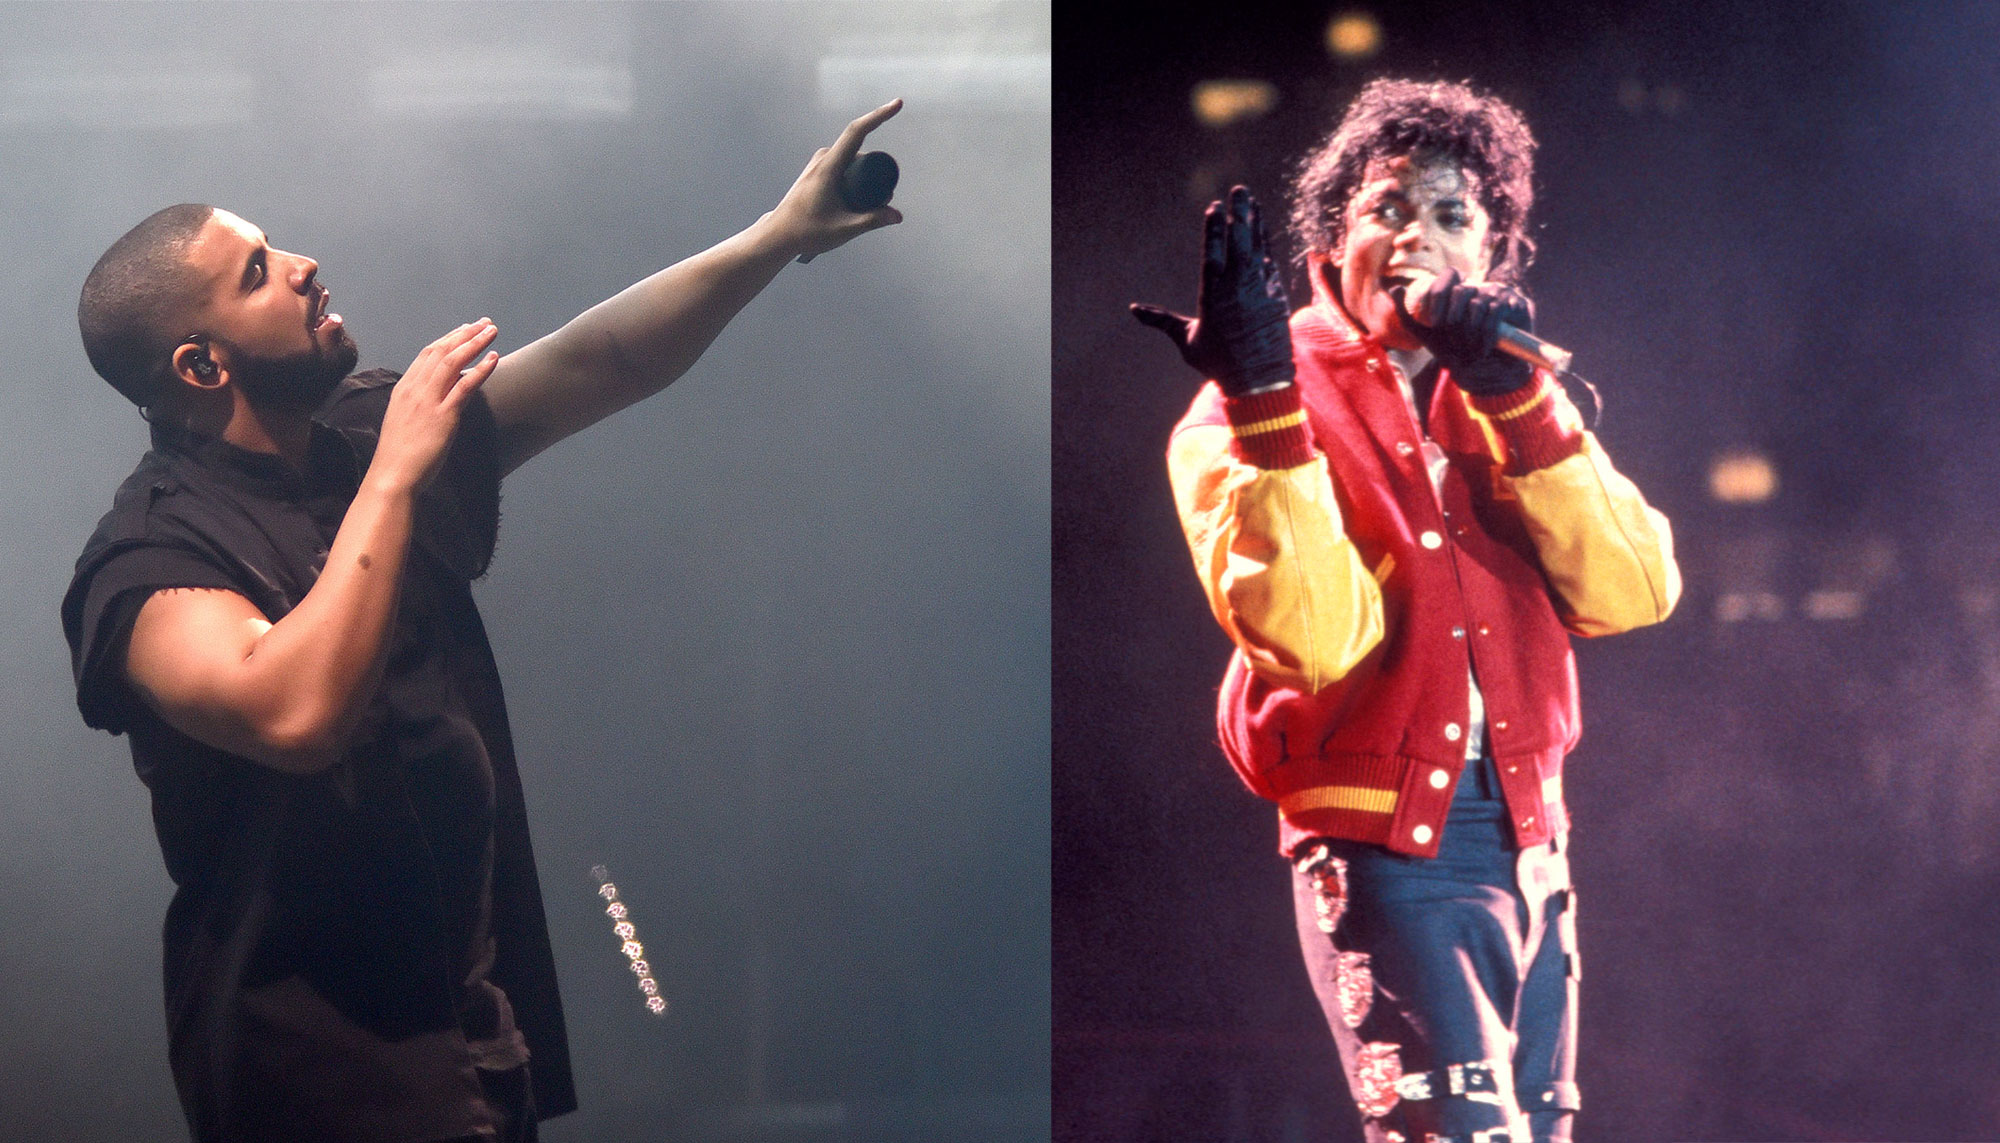 Drake Vs Michael Jackson The Legend Fans Debate Who Is Better!